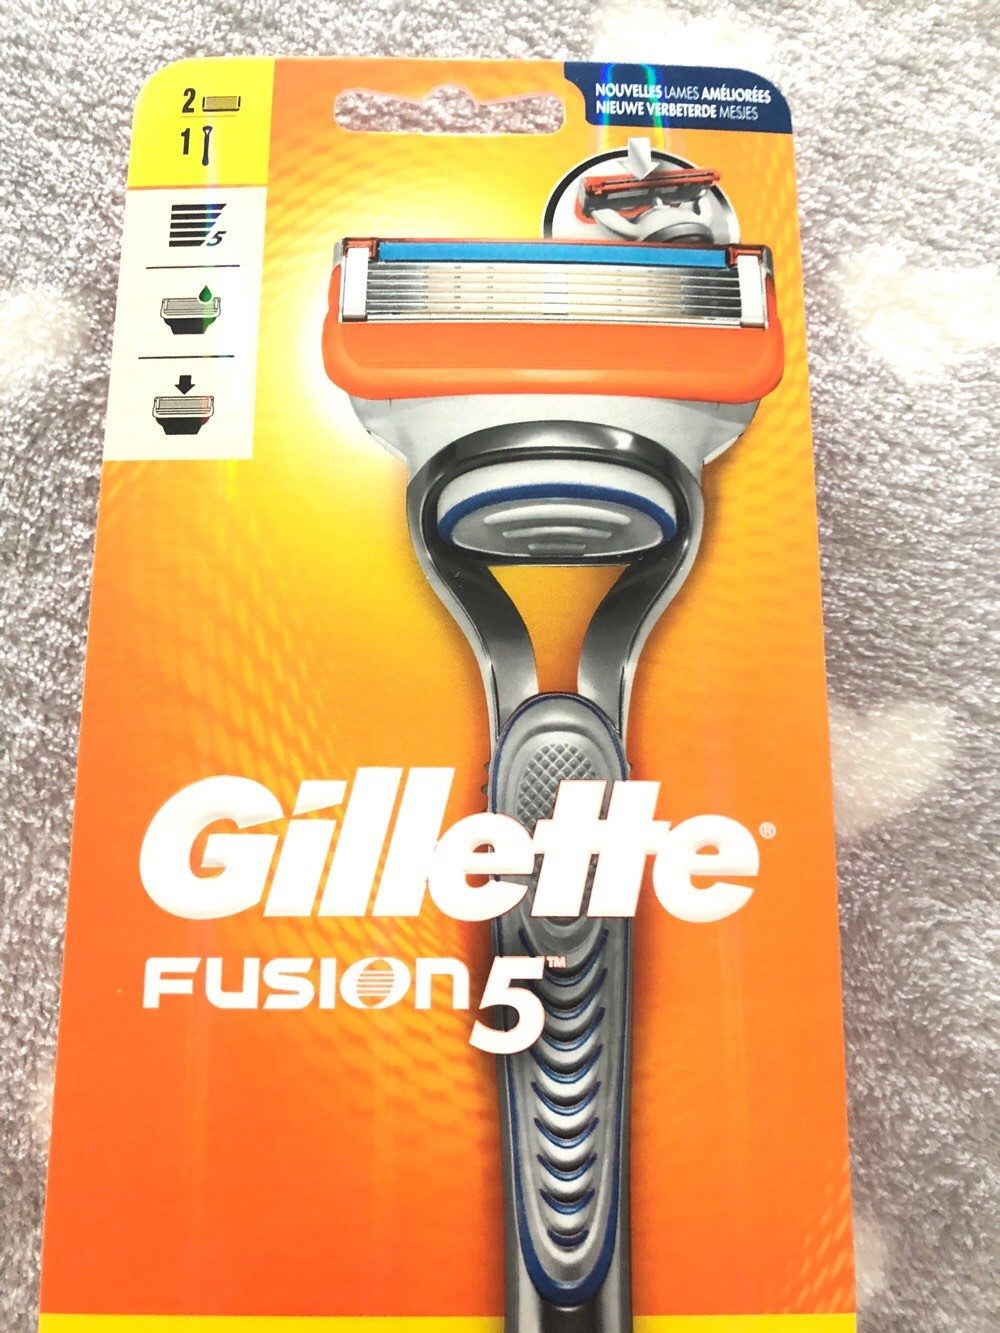 Gillette fusion 5 rasoir - Produkt - fr